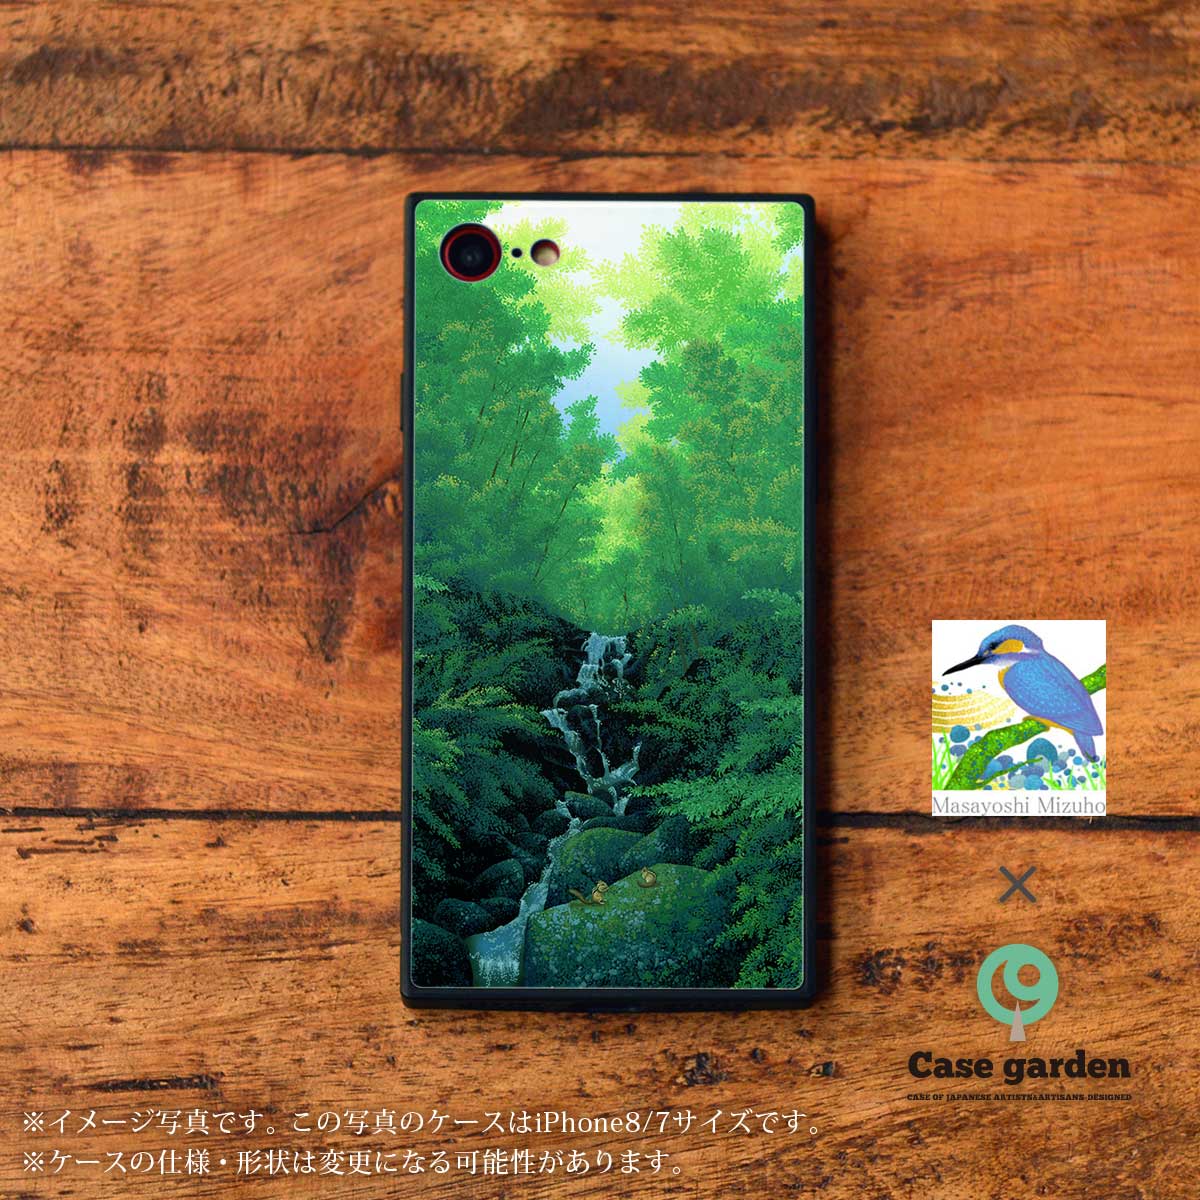 Masayoshi Mizuhoデザインの、キラキラと輝く背面カバーのガラスが美しいスクエア型強化ガラススマホケース「水色薫風」です。写真の機種はiPhoneXRです。